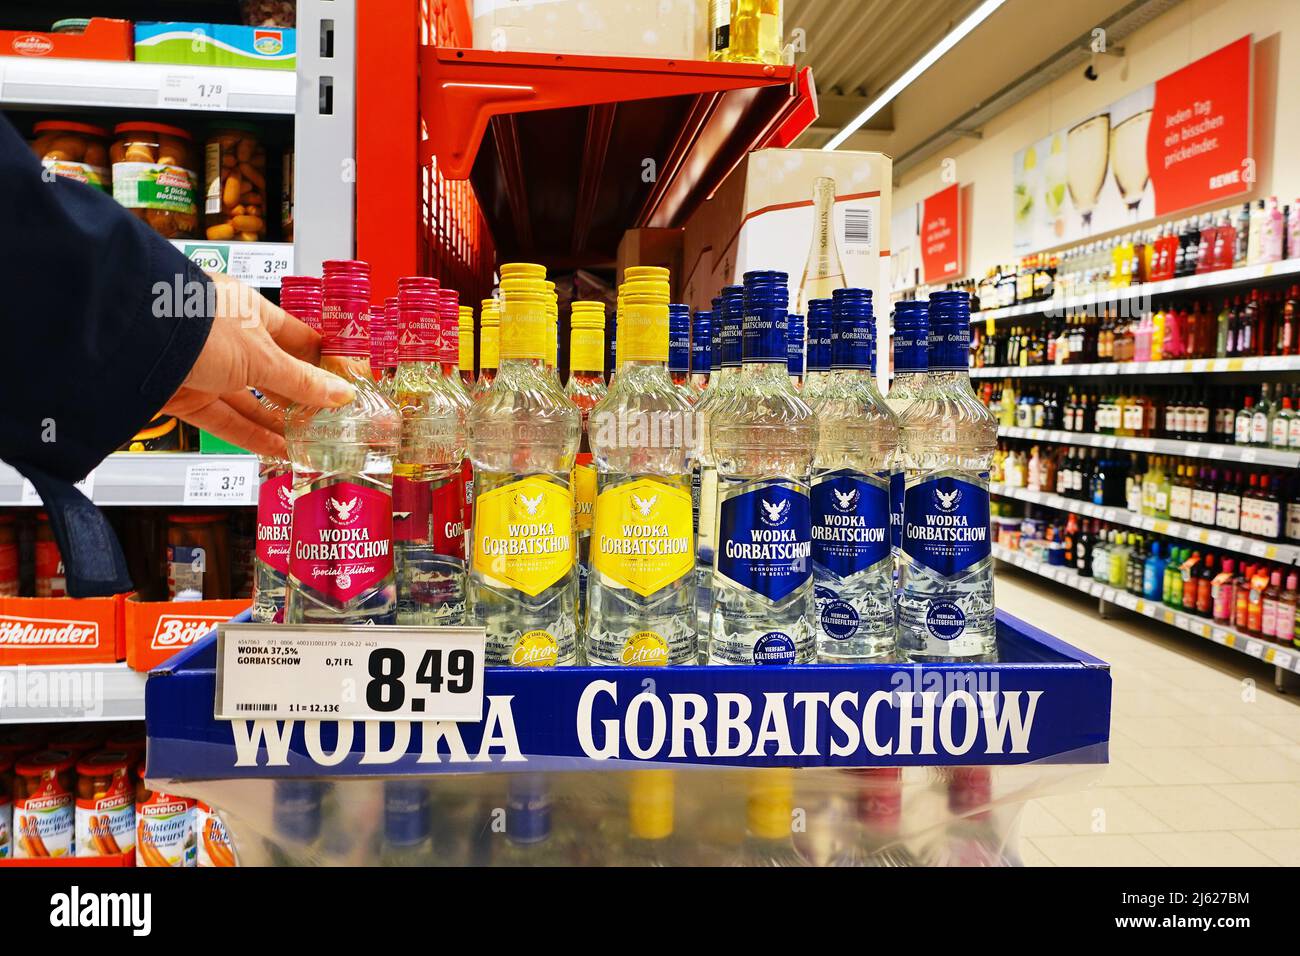 Wodka Gorbatschow in a supermarket Stock Photo